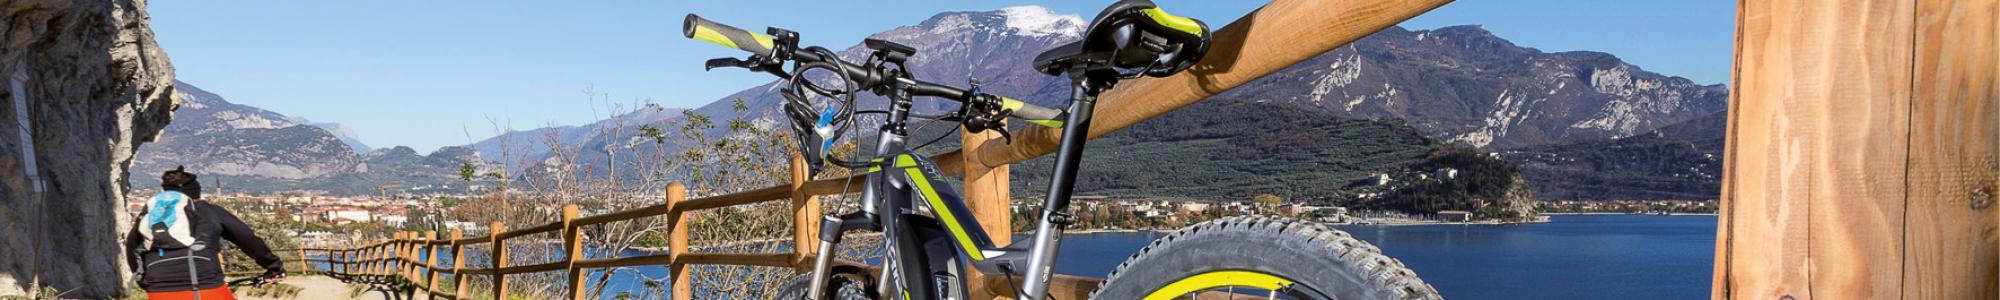 RUDY GIFT BOX - E-Bike Experience und SPA